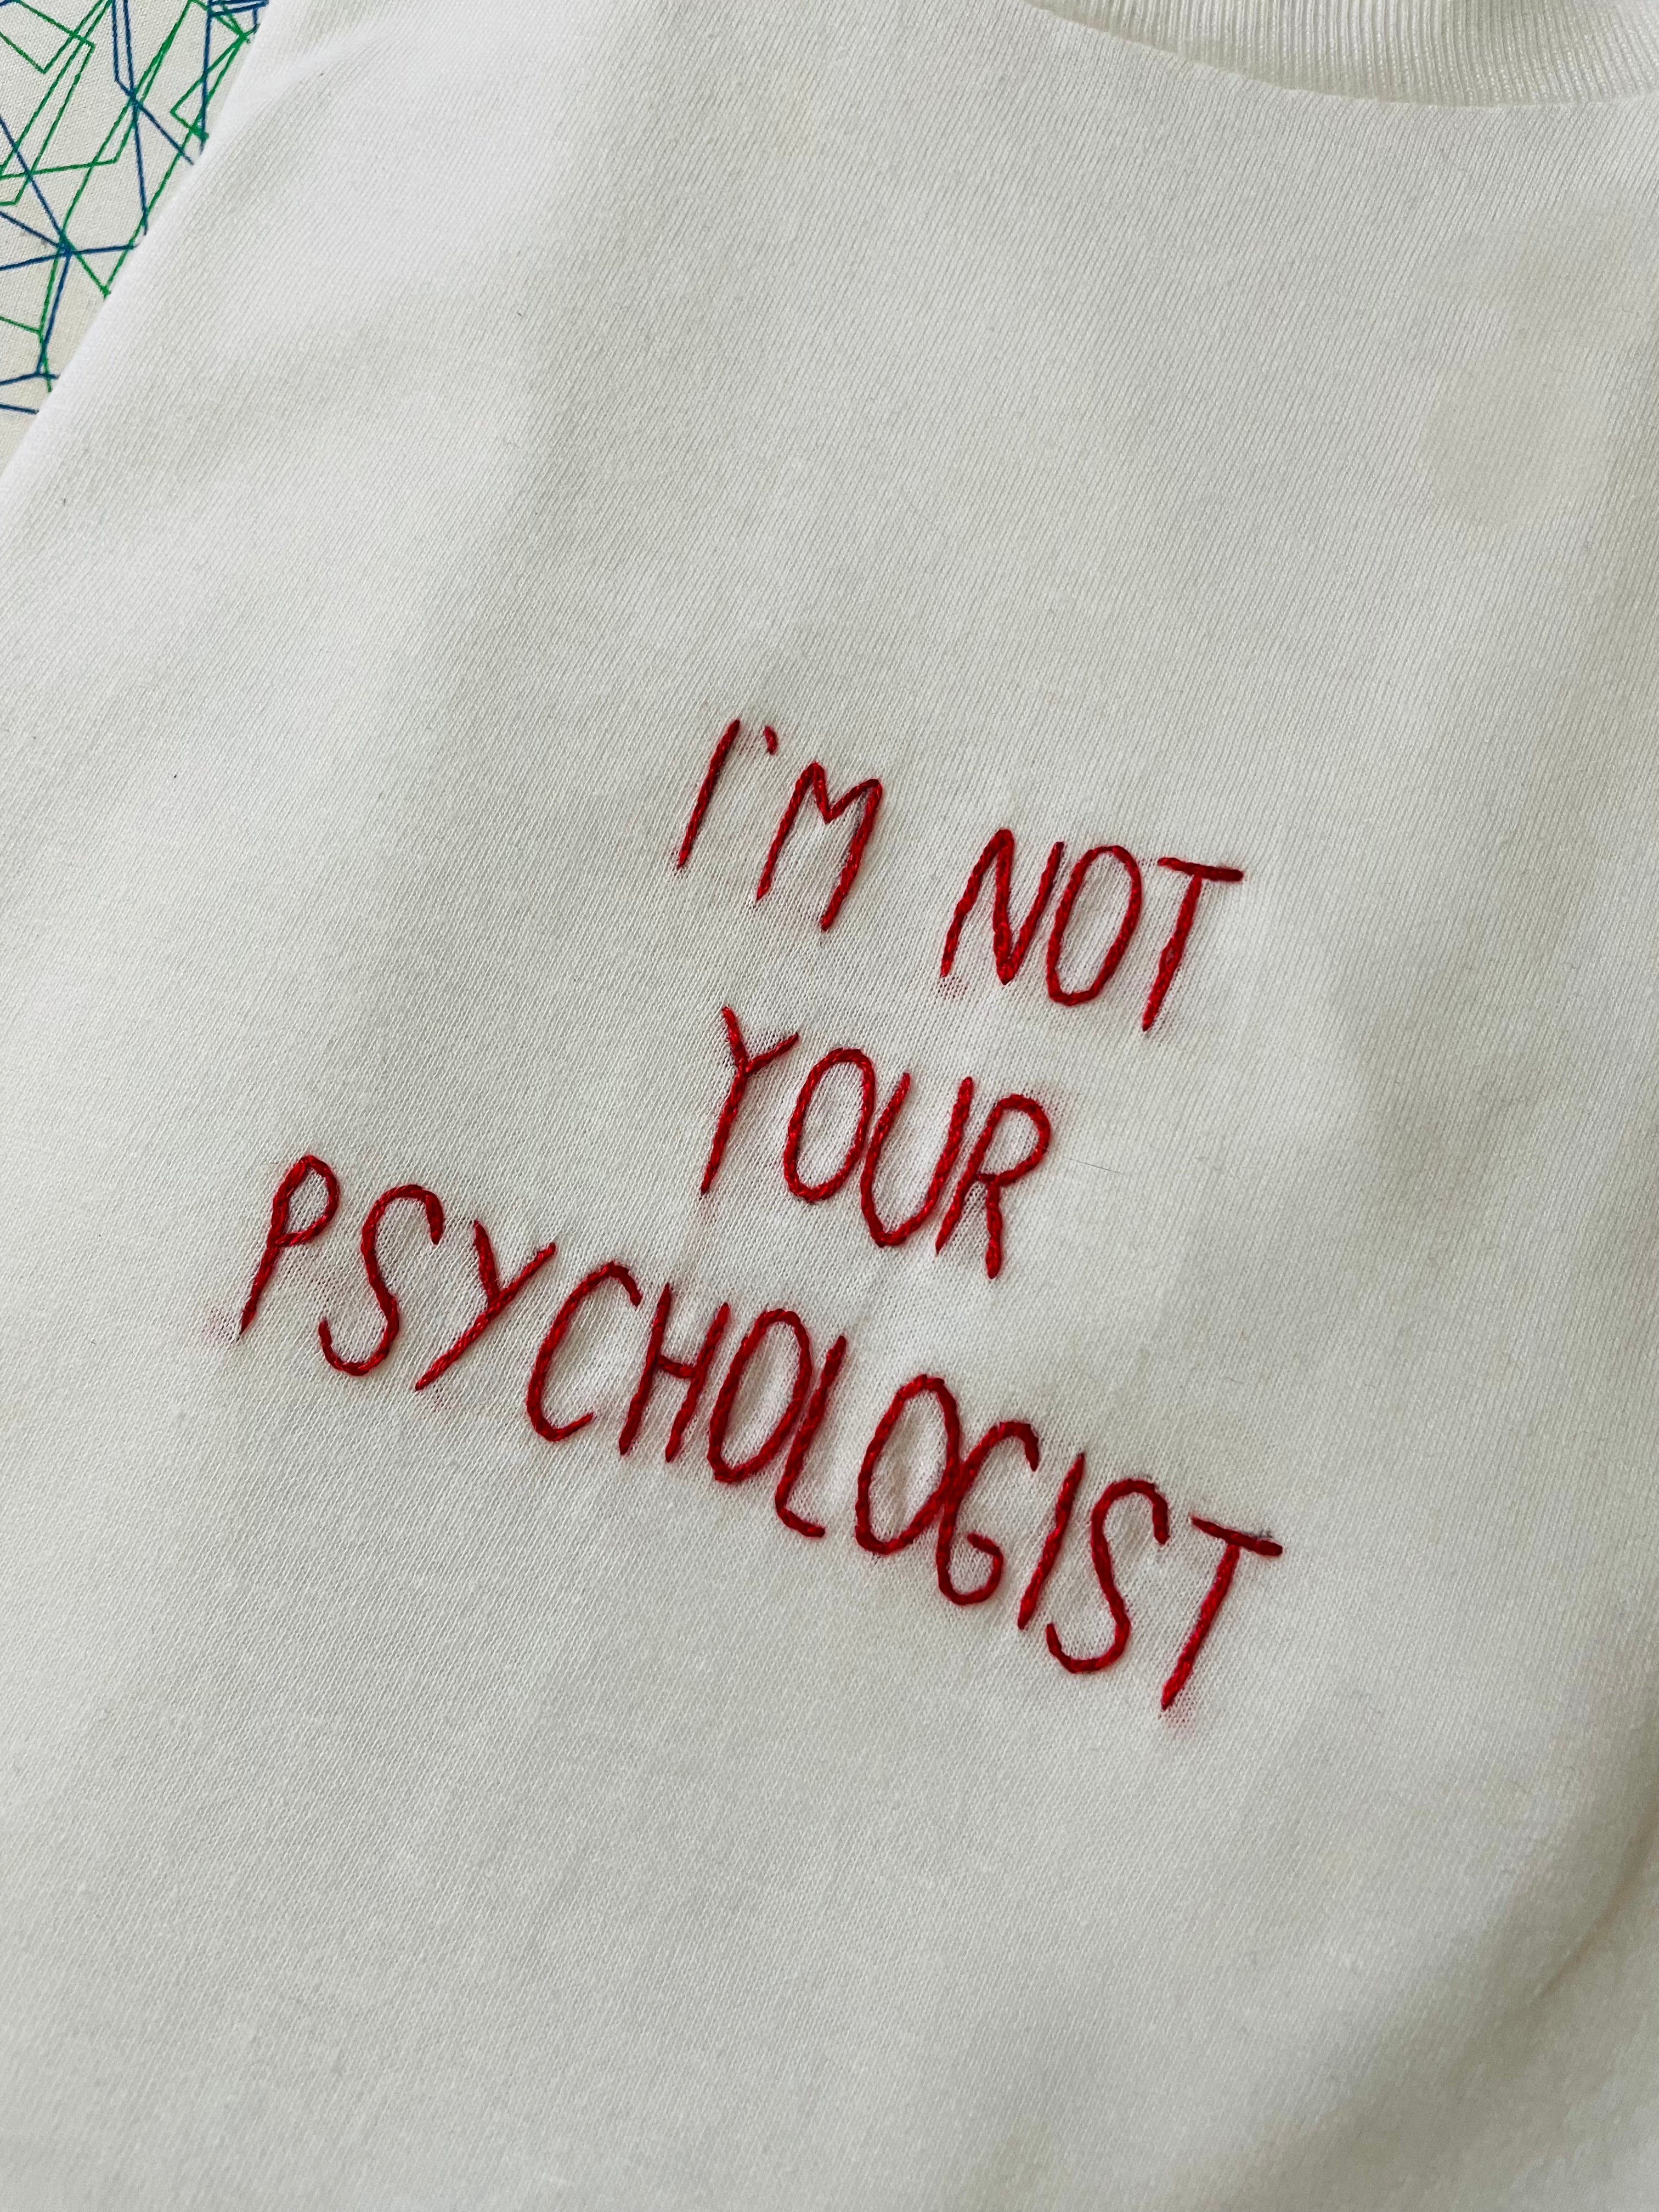 I'm not your psychologist